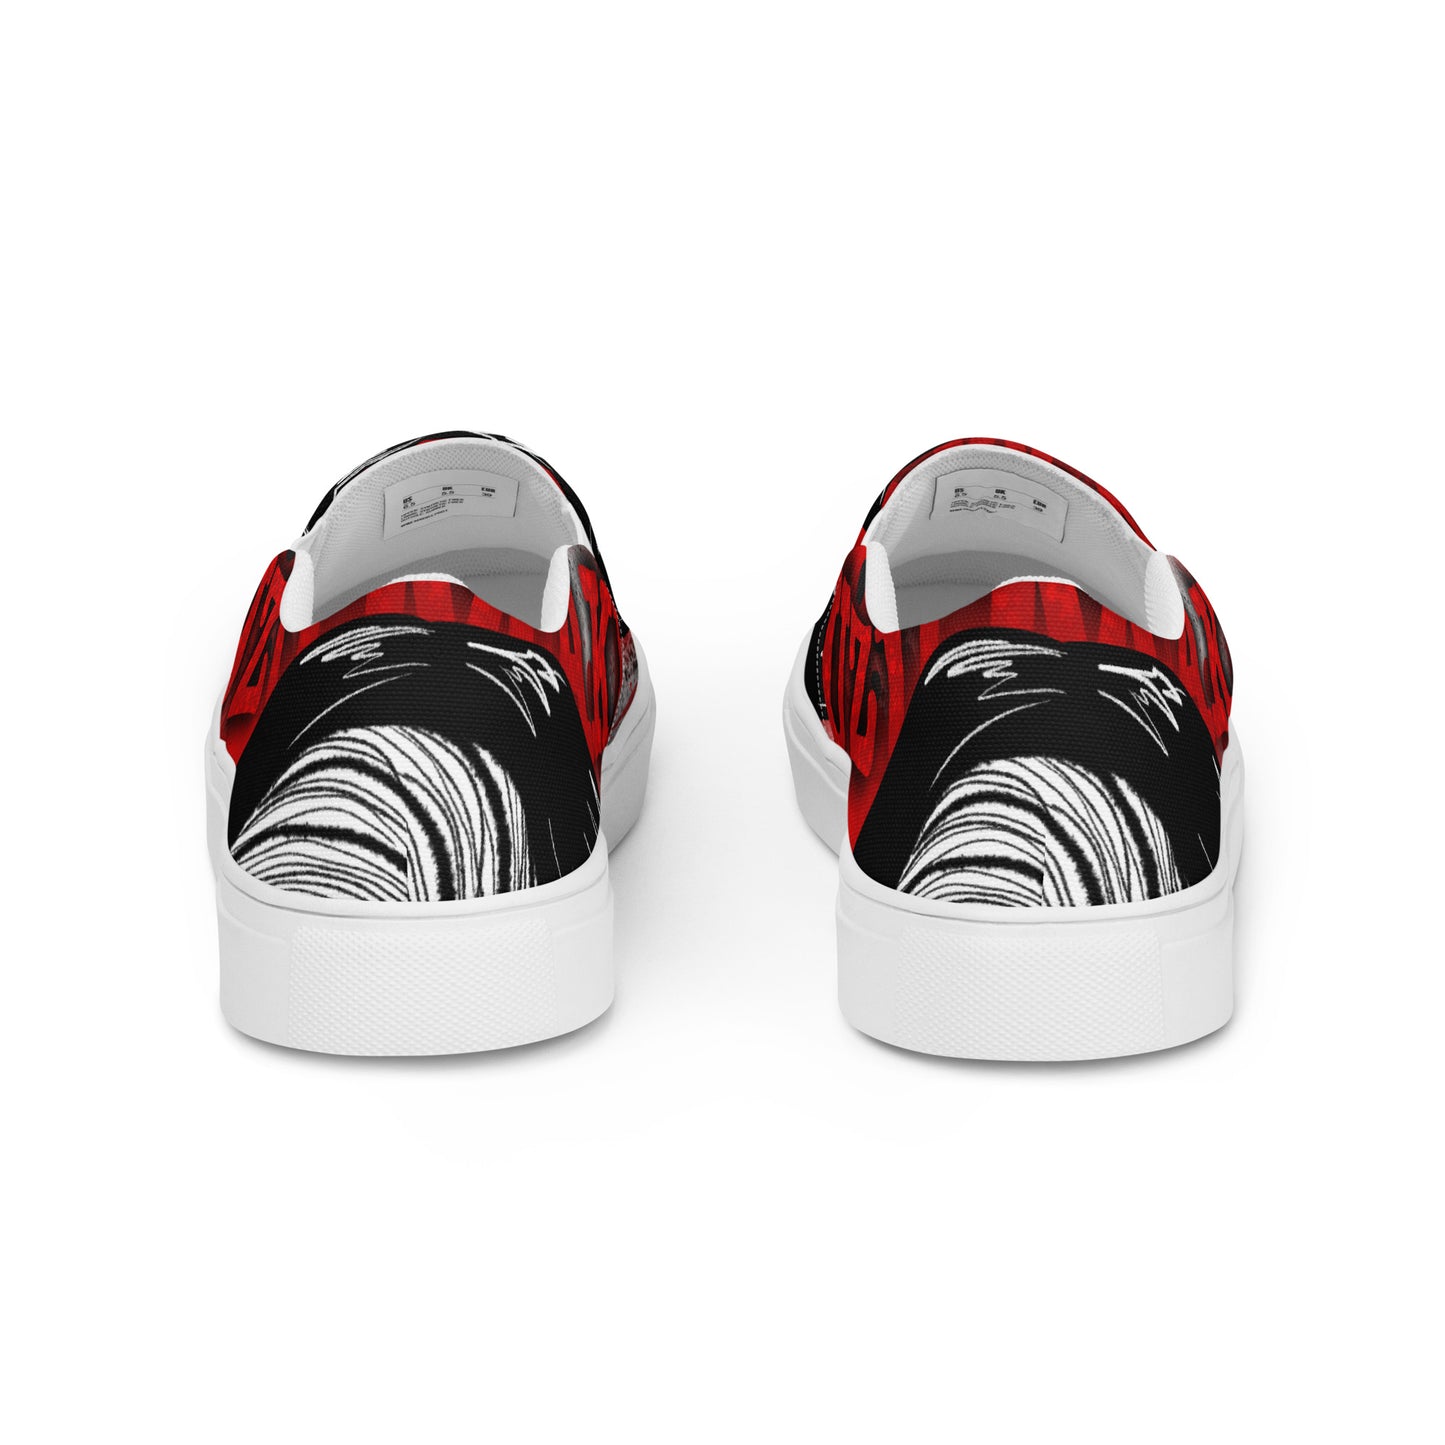 Uzumaki Men’s slip-on canvas shoes